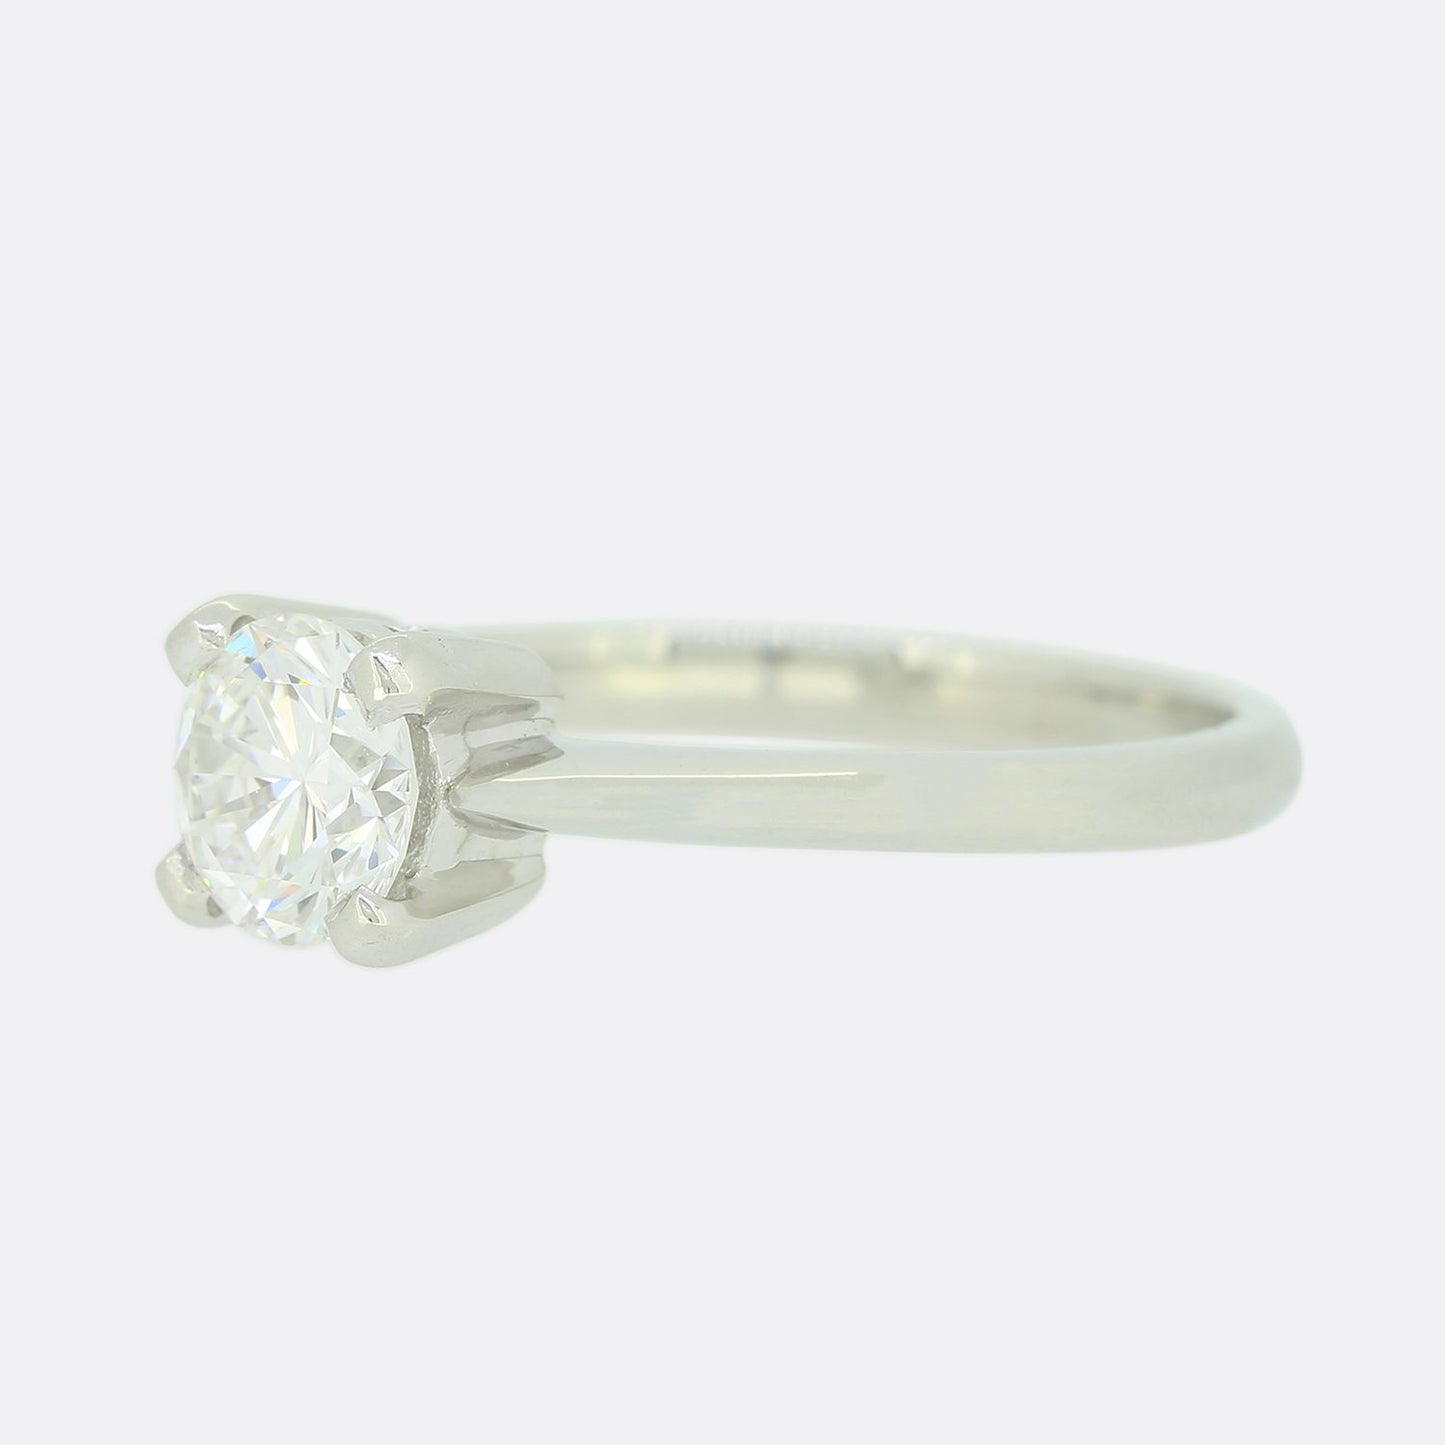 0.77 Carat Diamond Solitaire Engagement Ring